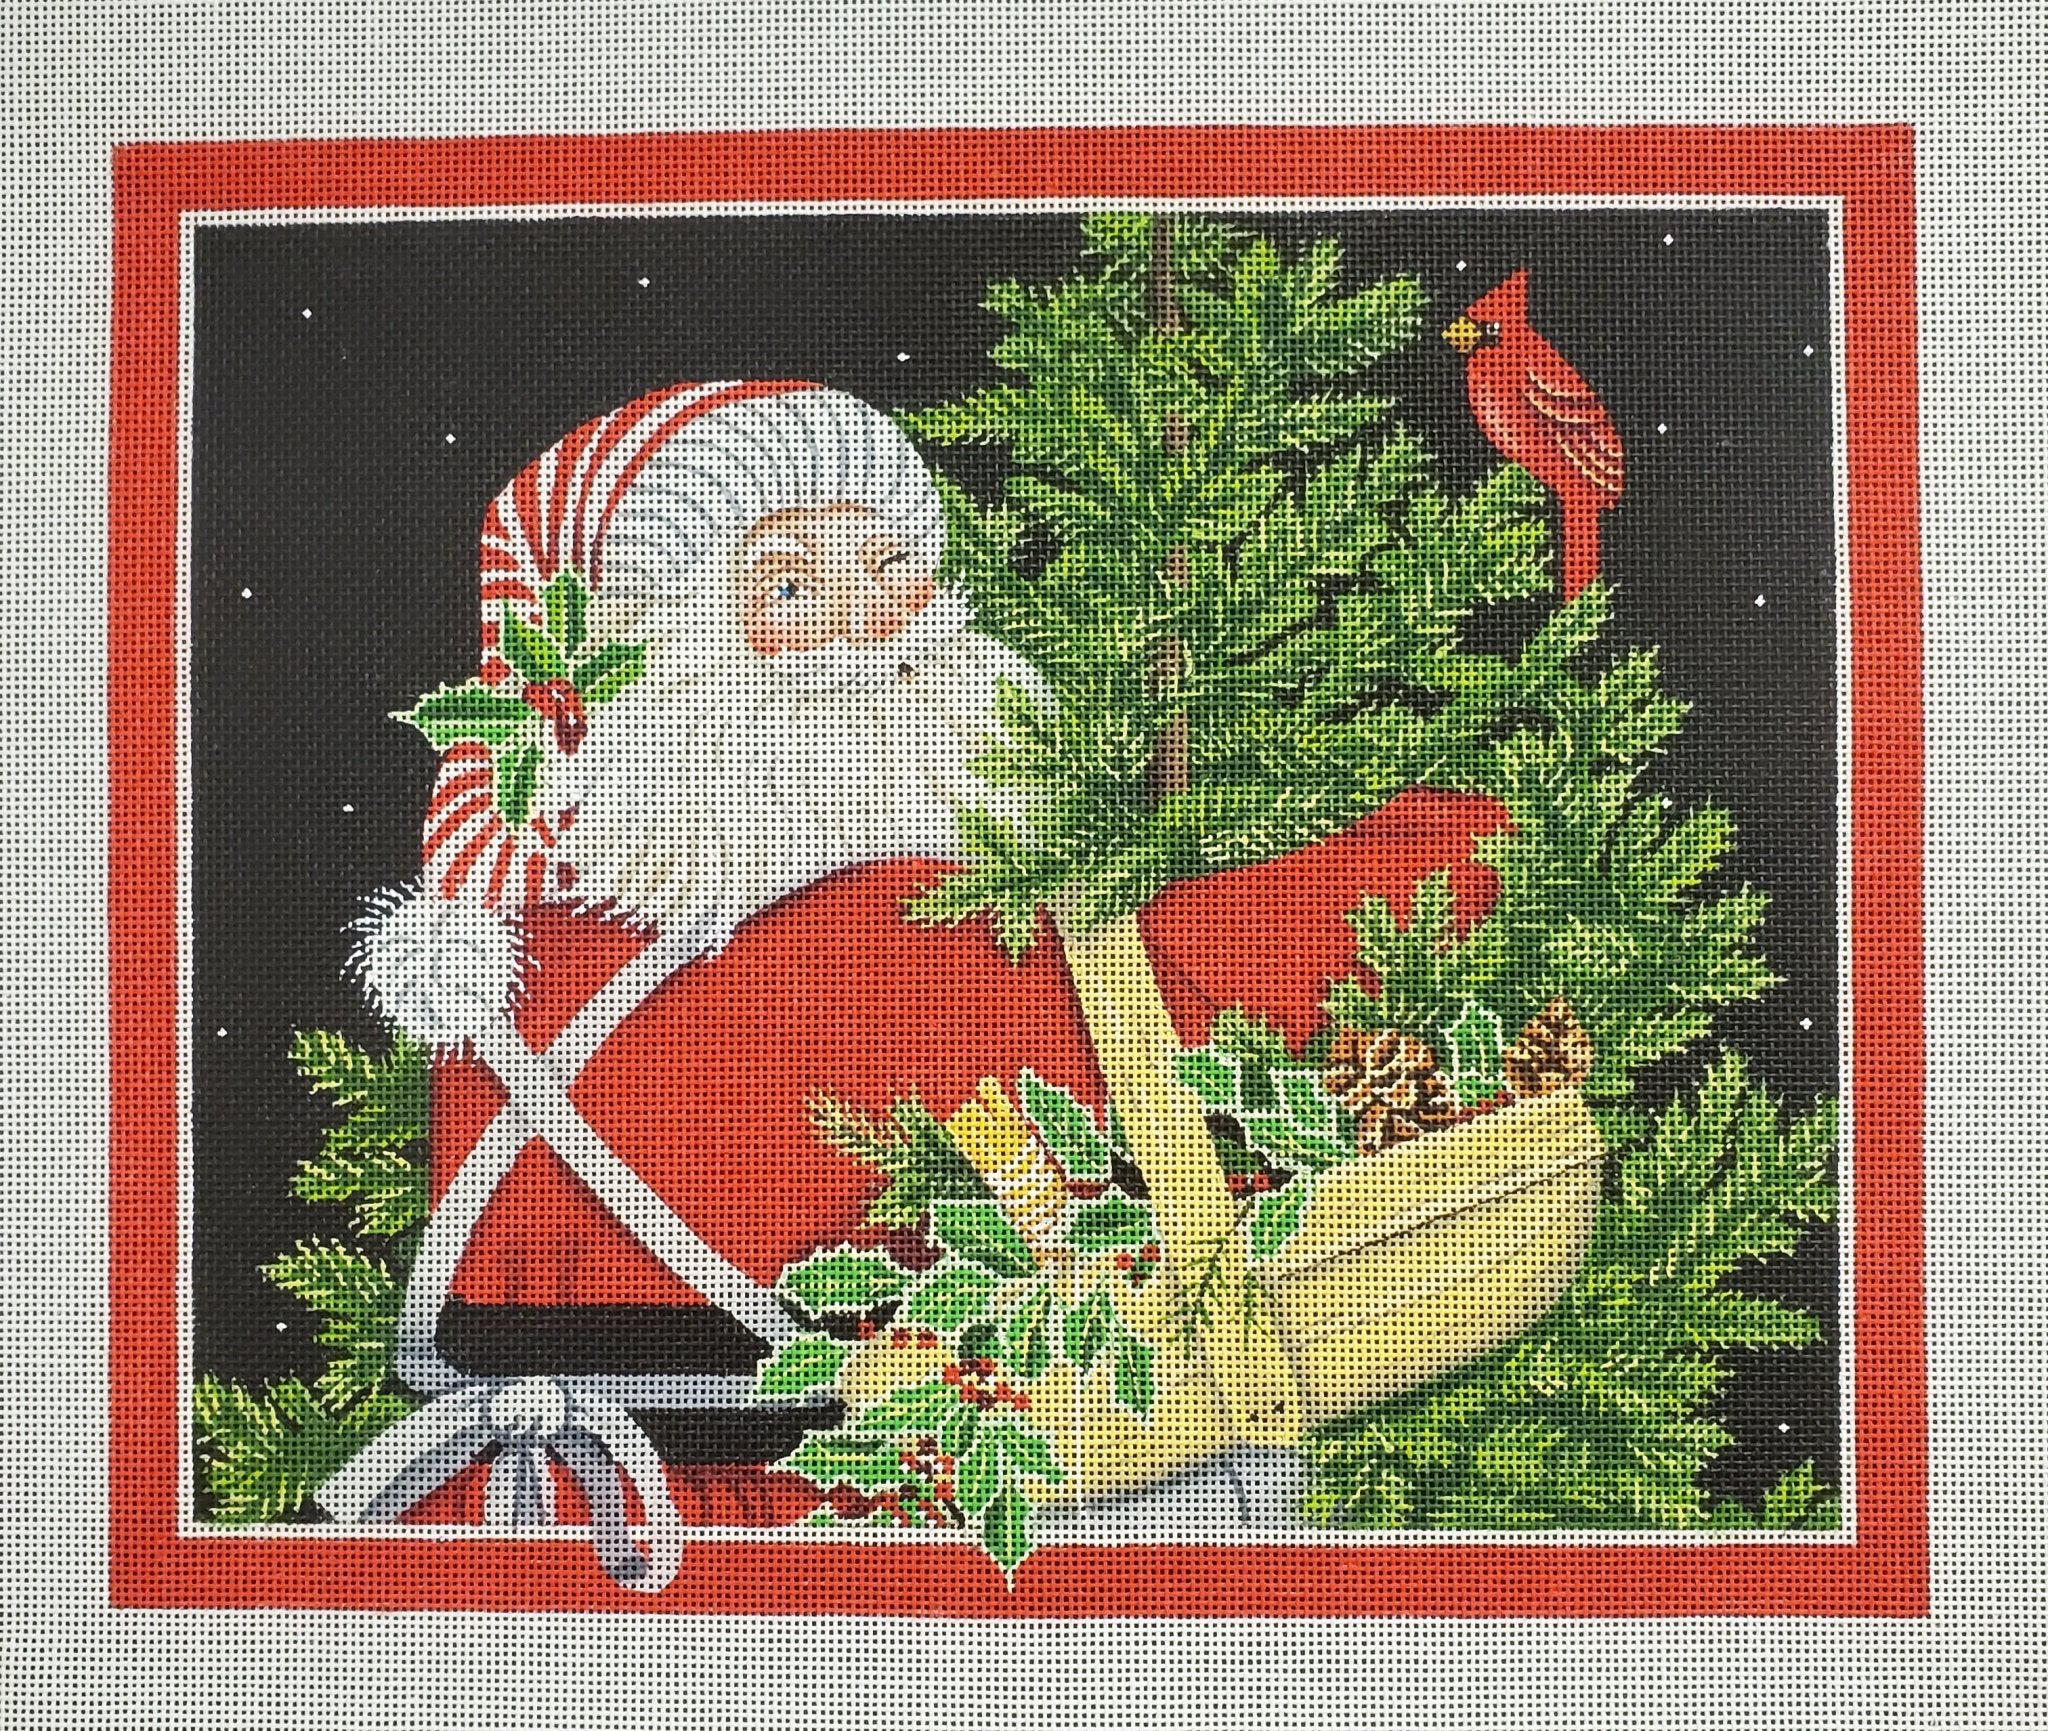 Santa and the Cardinal - The Flying Needles